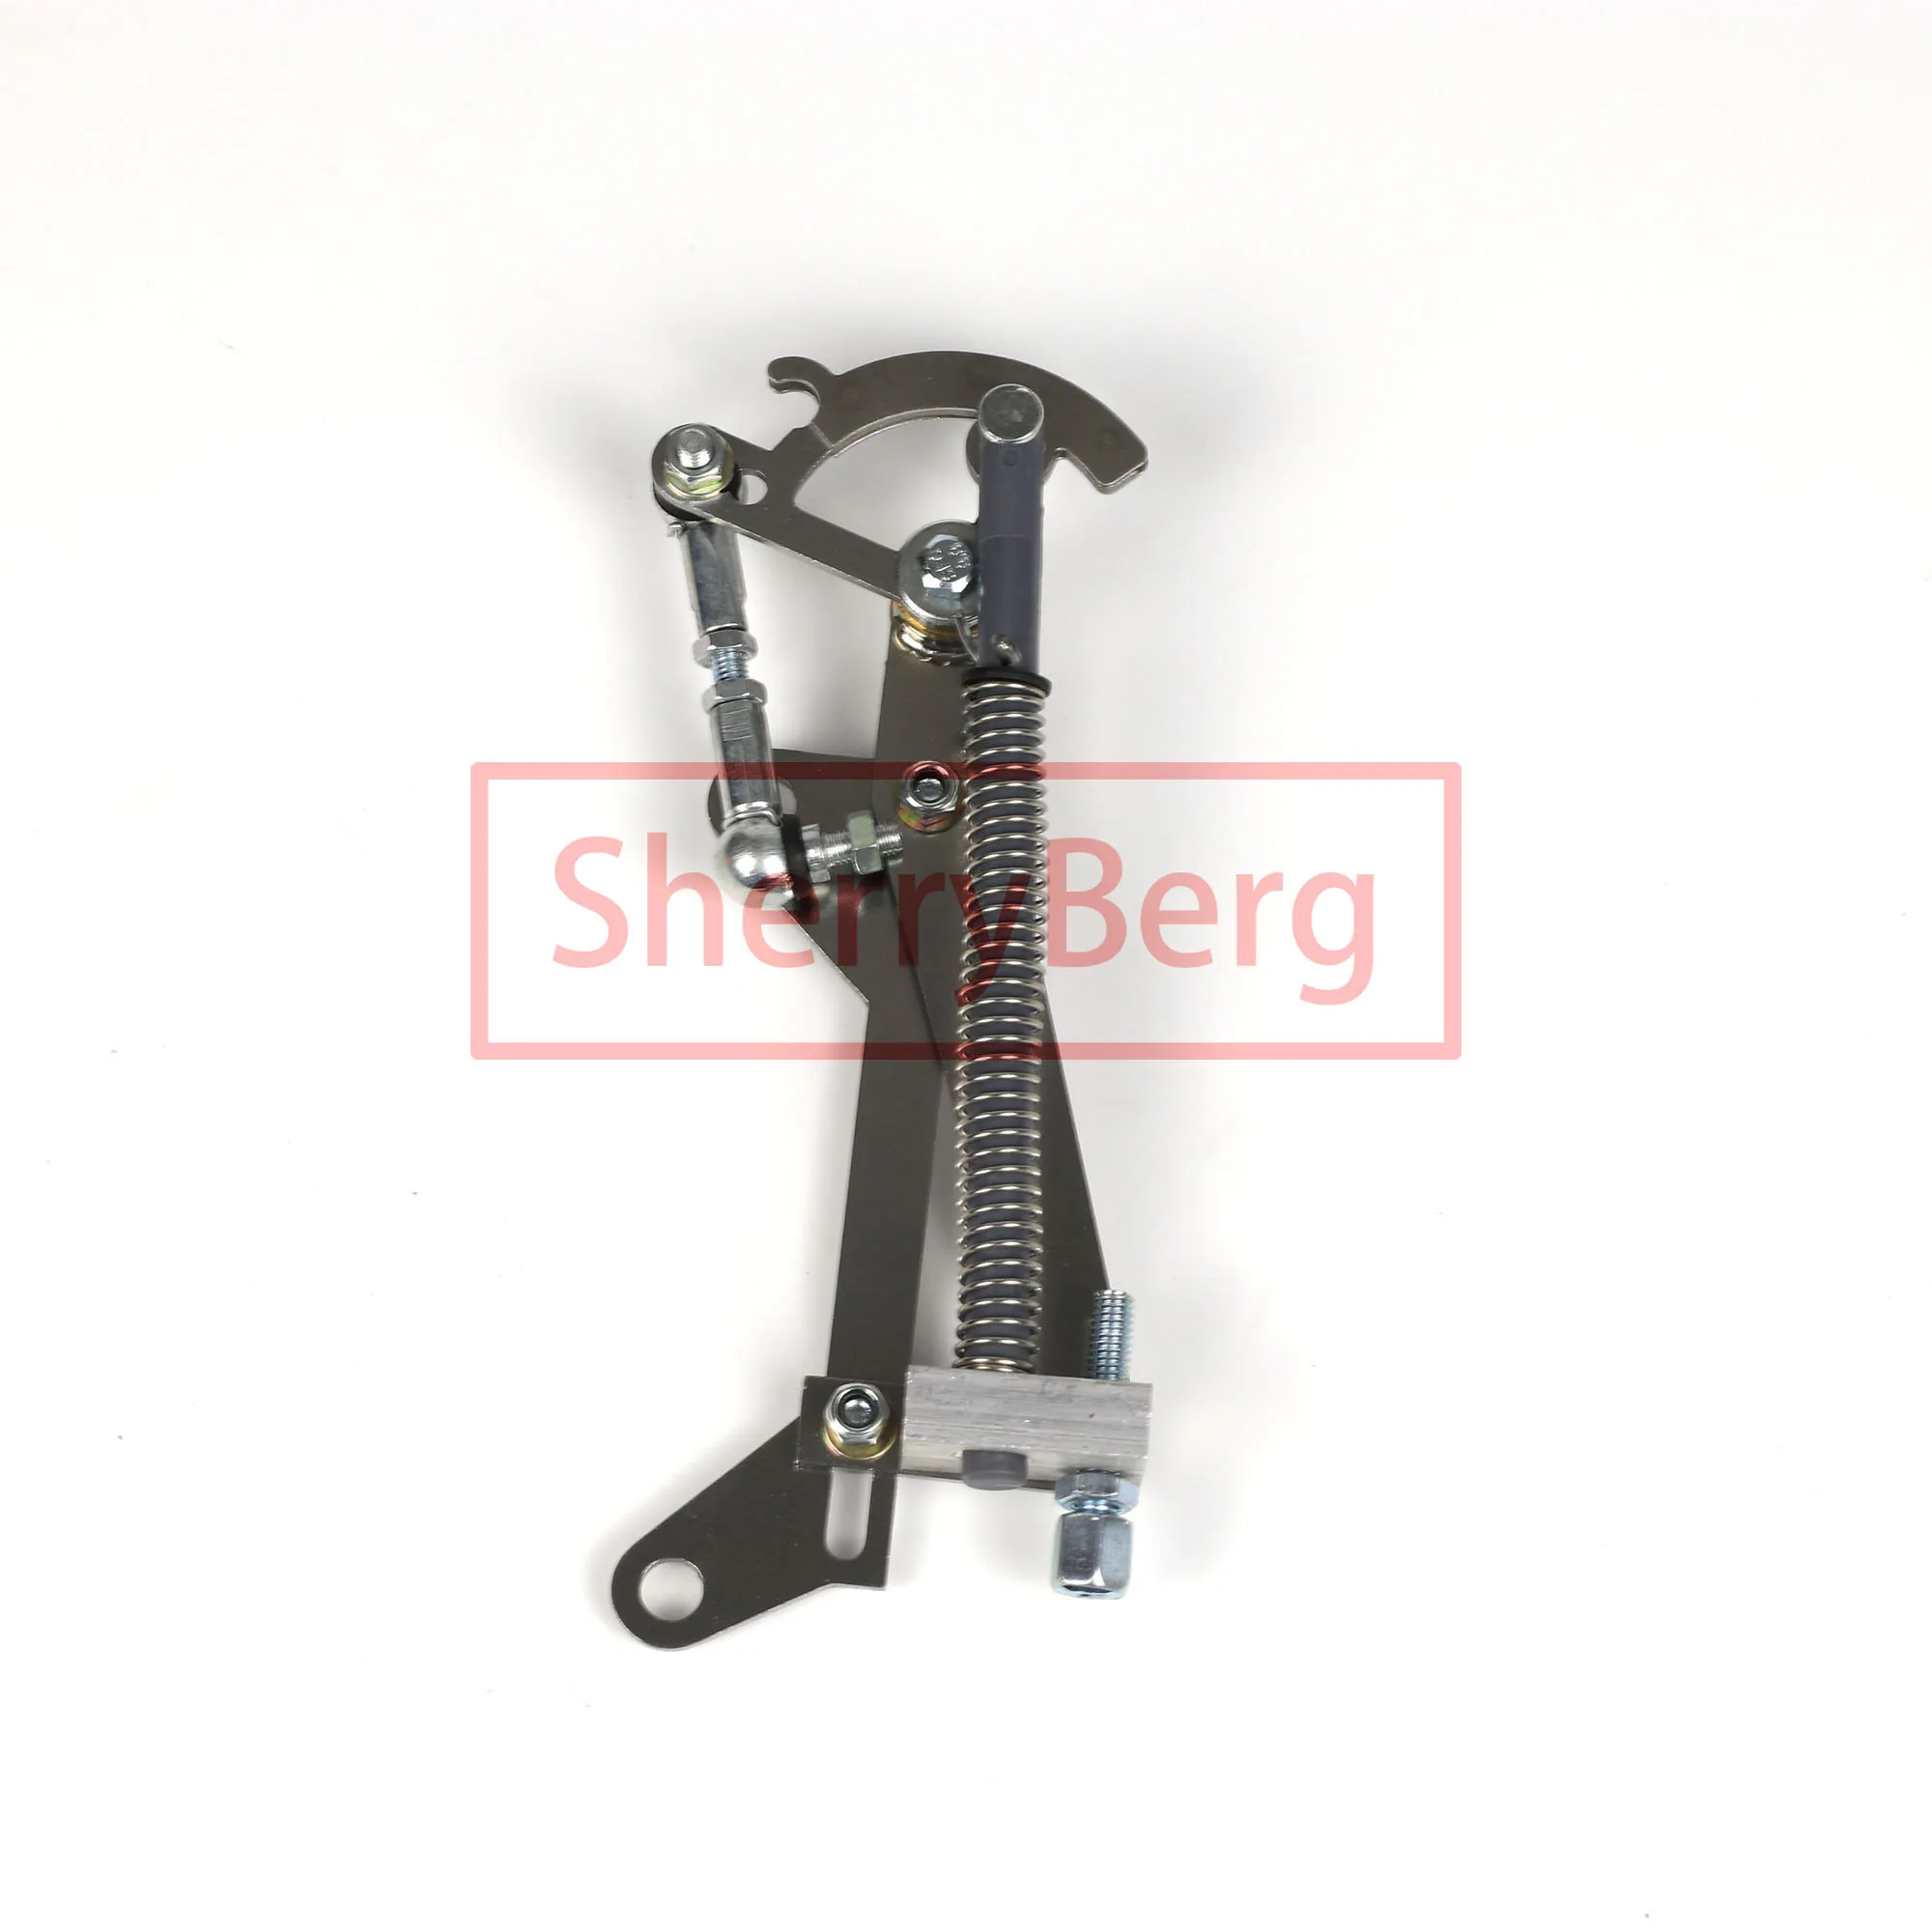 

SherryBerg FAJS Throttle Linkage Kit thorttle body Throttle Linkage Kit Injection Body for Weber 40/45/48 DCOE /Dellorto/ Jenvey